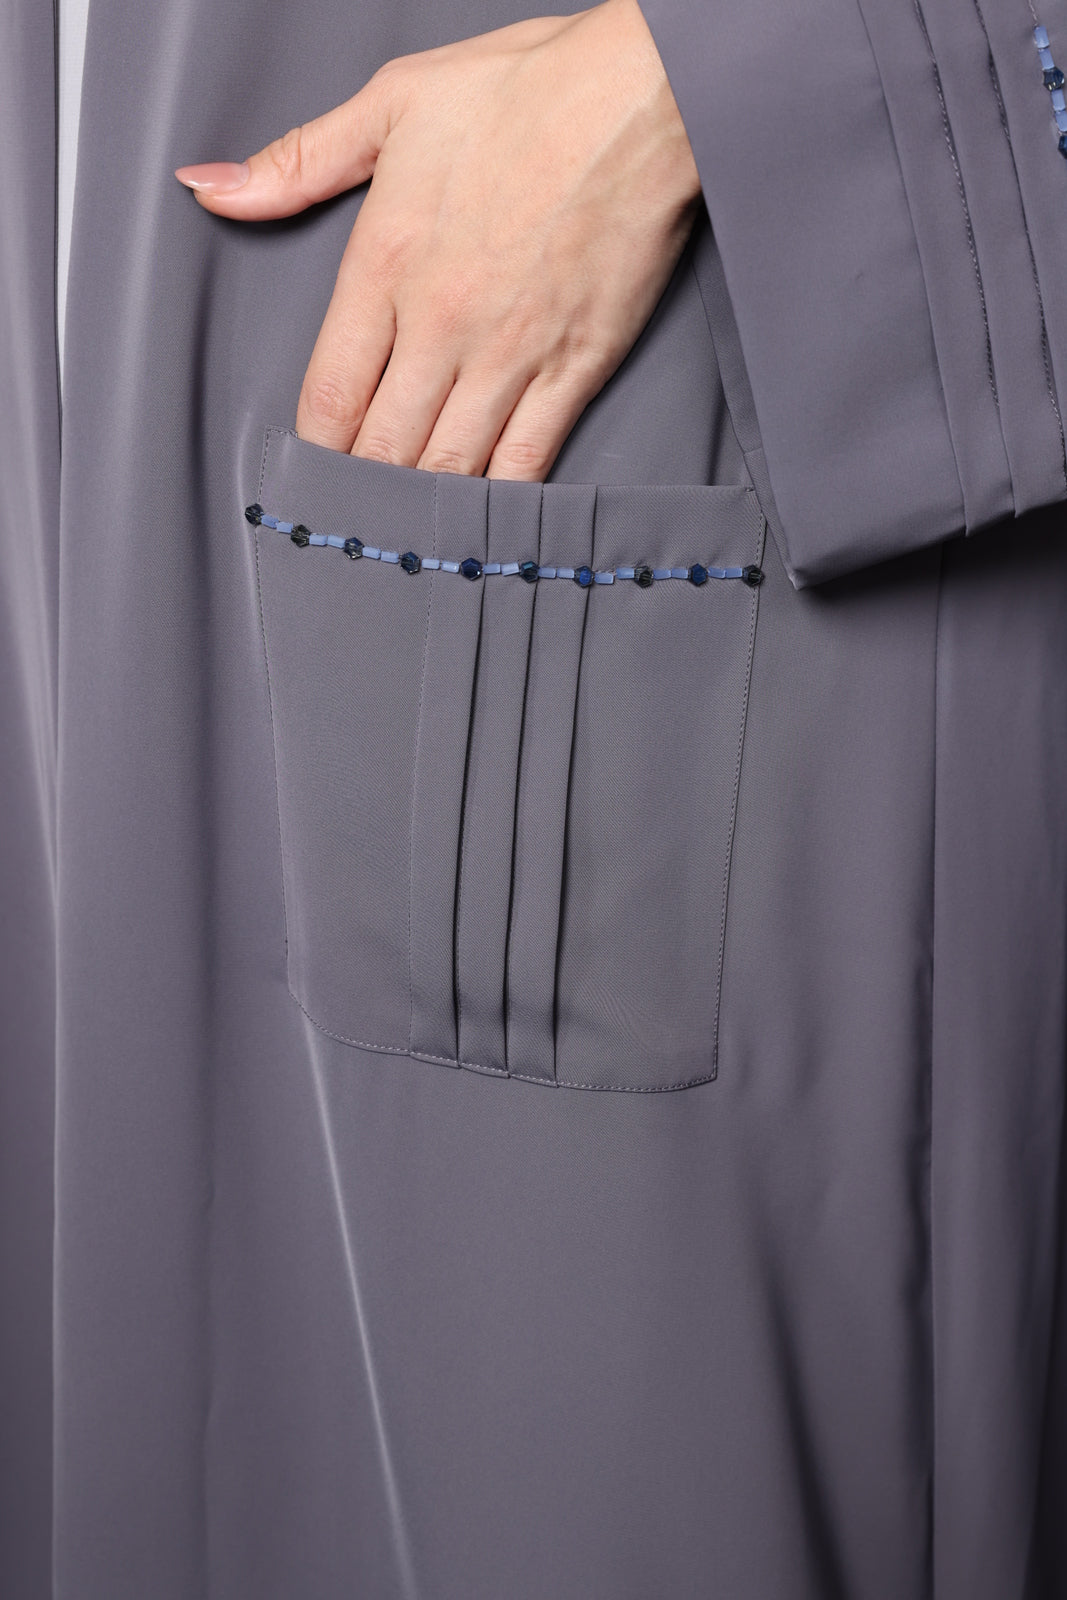 Abaya with embellished patch pockets